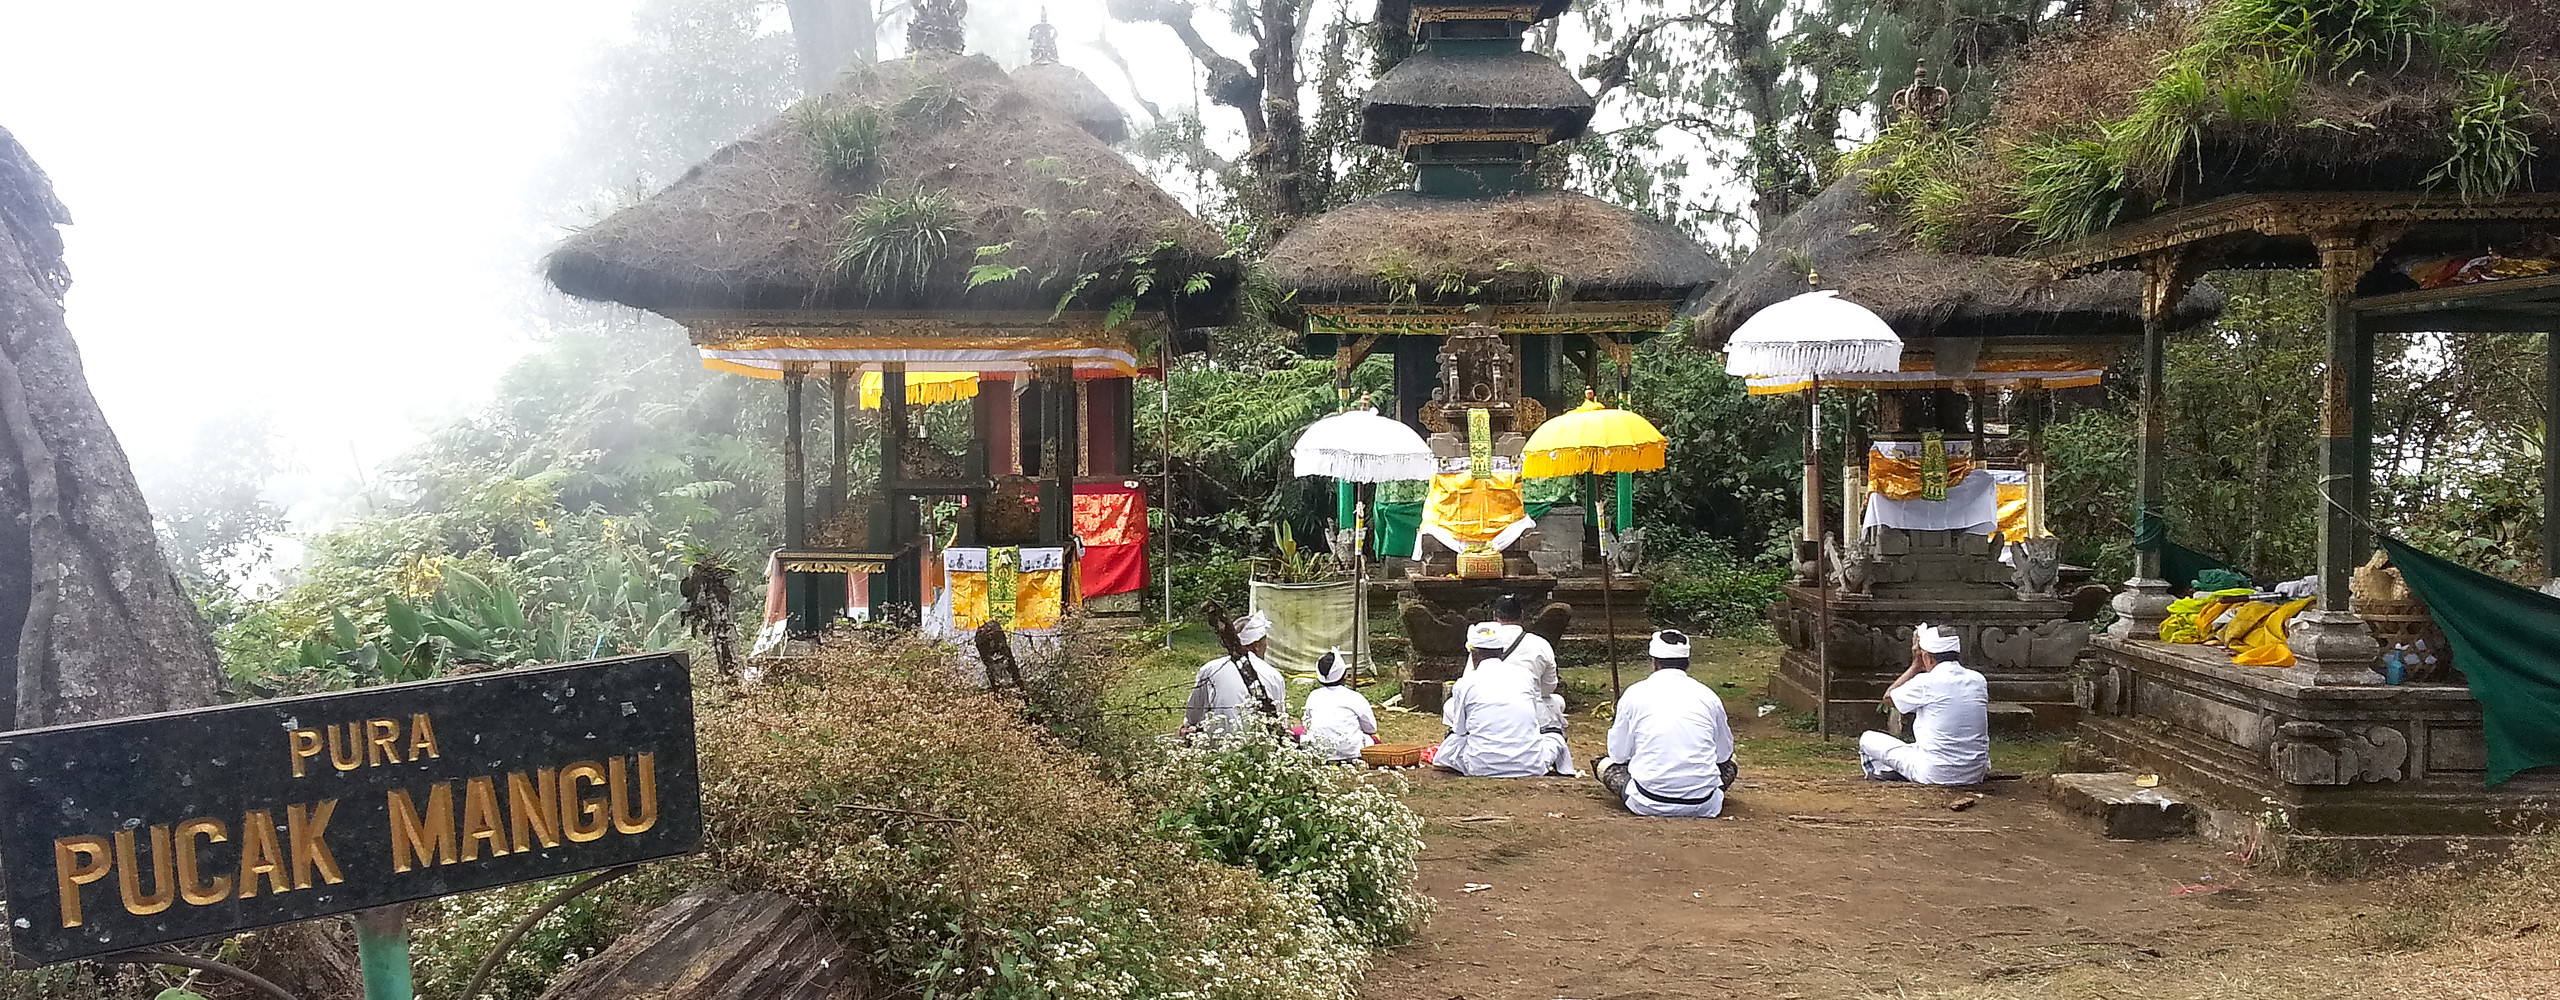 Pura Pucak Mangu templom a hegycsúcson